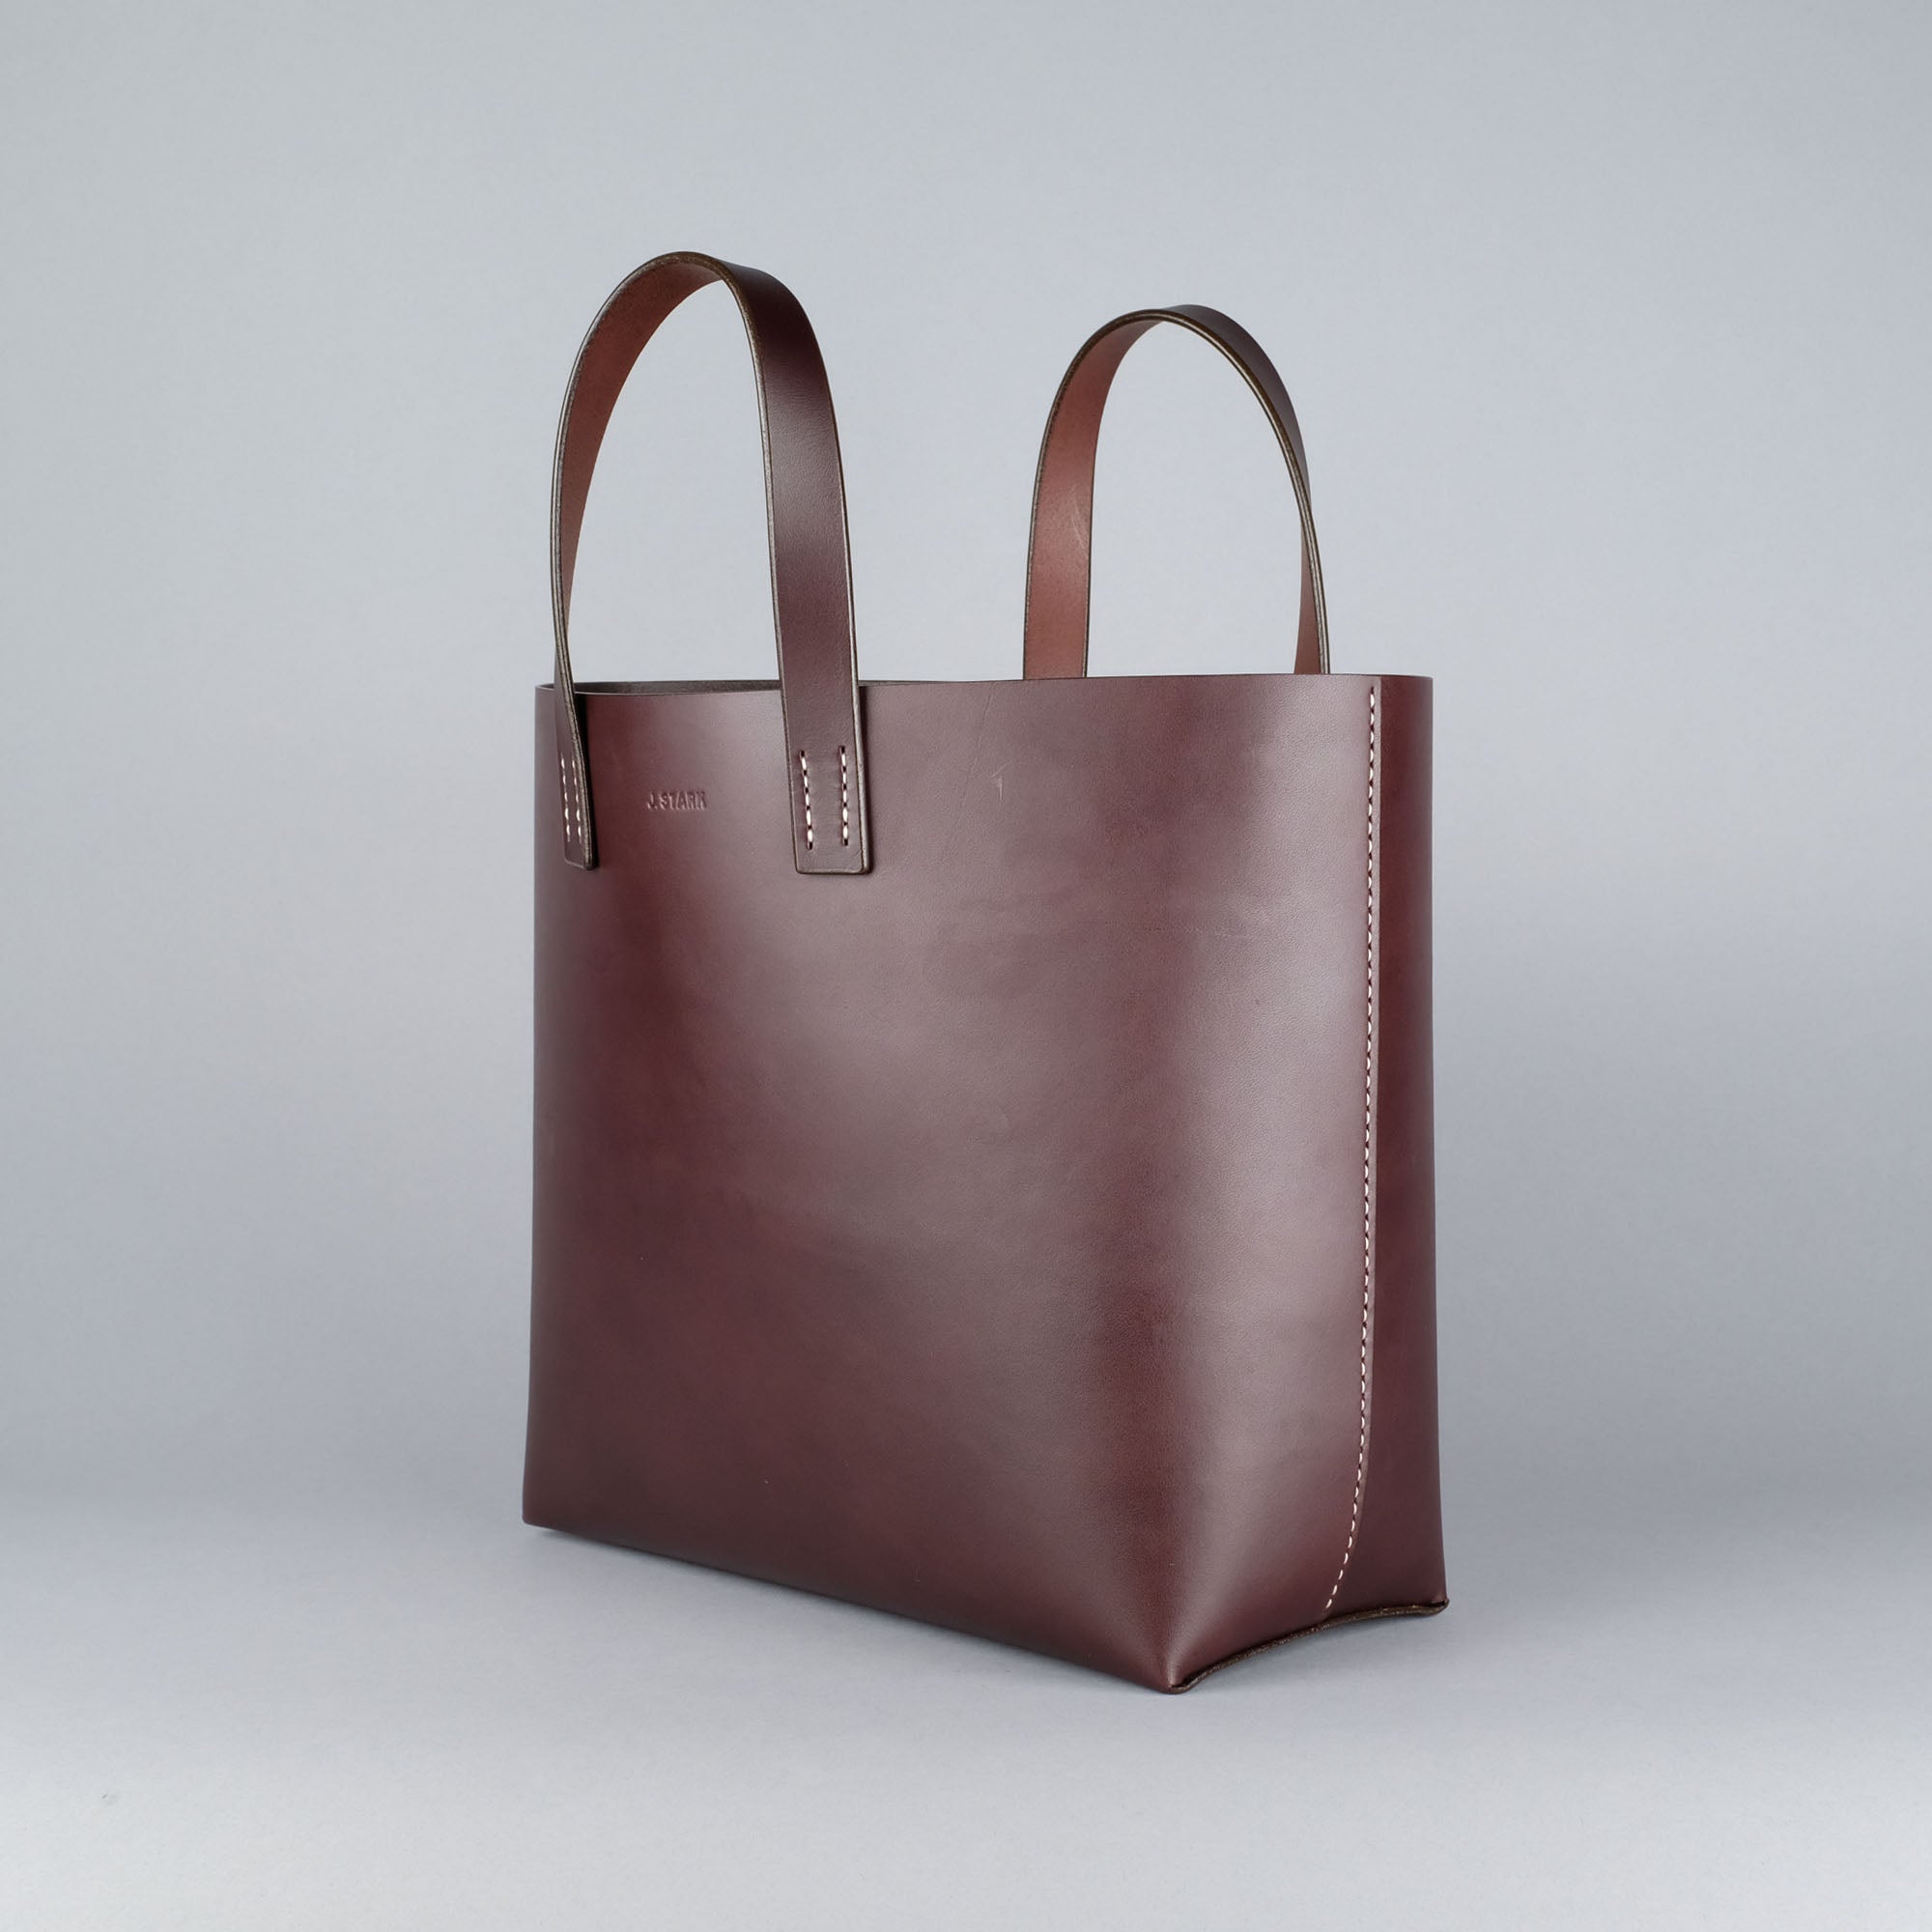 Rustic Brown Portfolio Bag – BLINK LEATHER